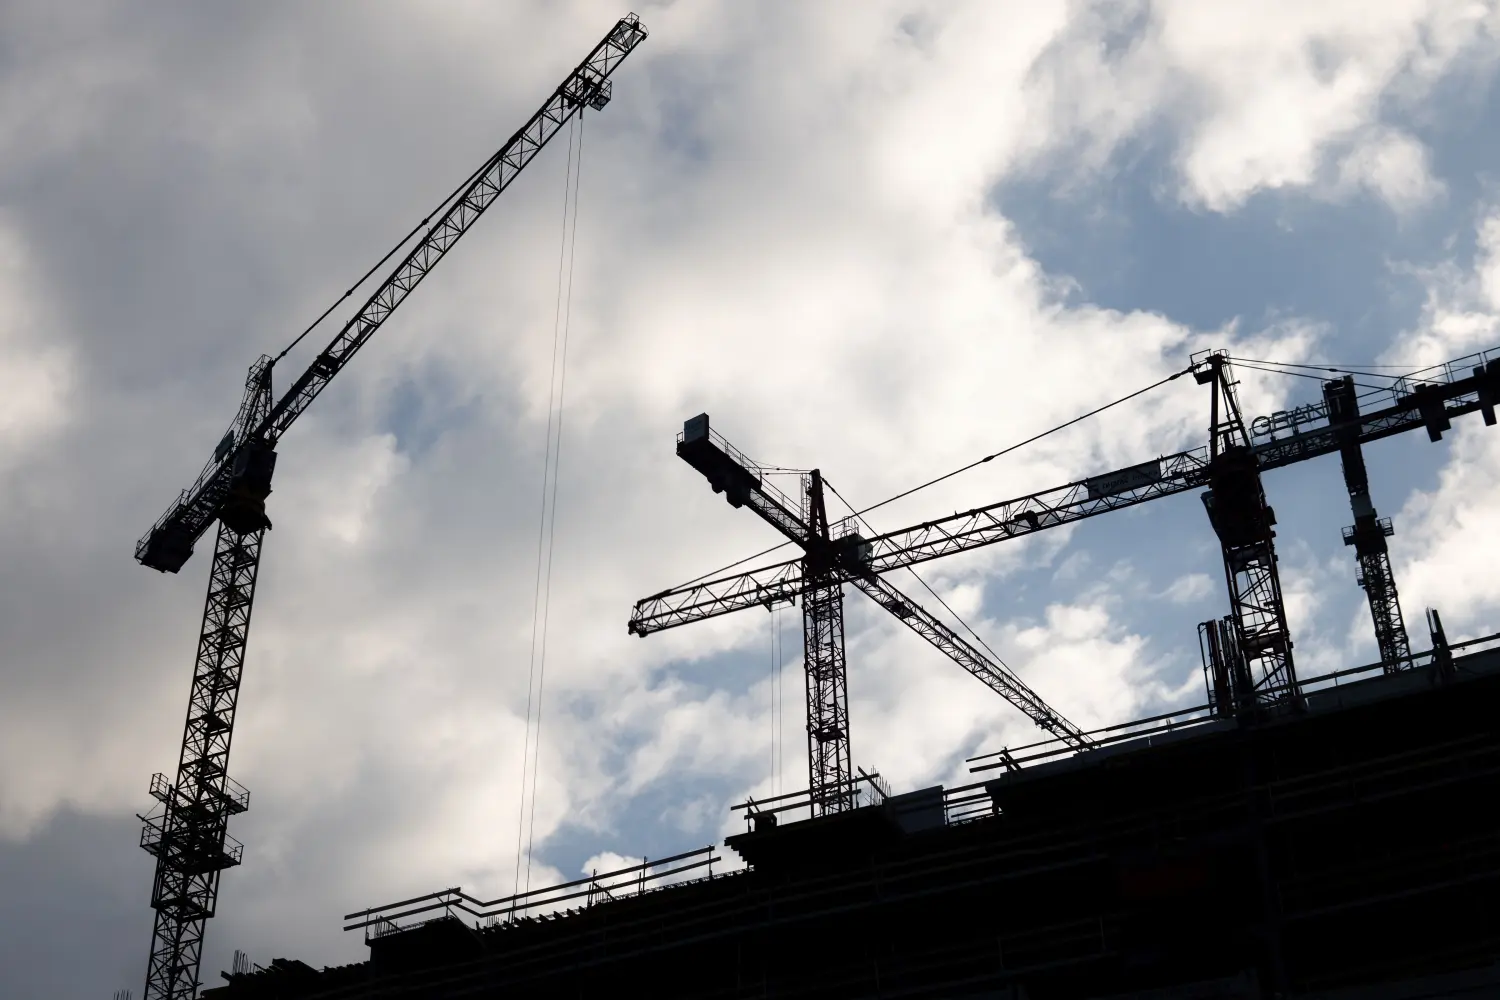 Constructions cranes against a cloudy sky